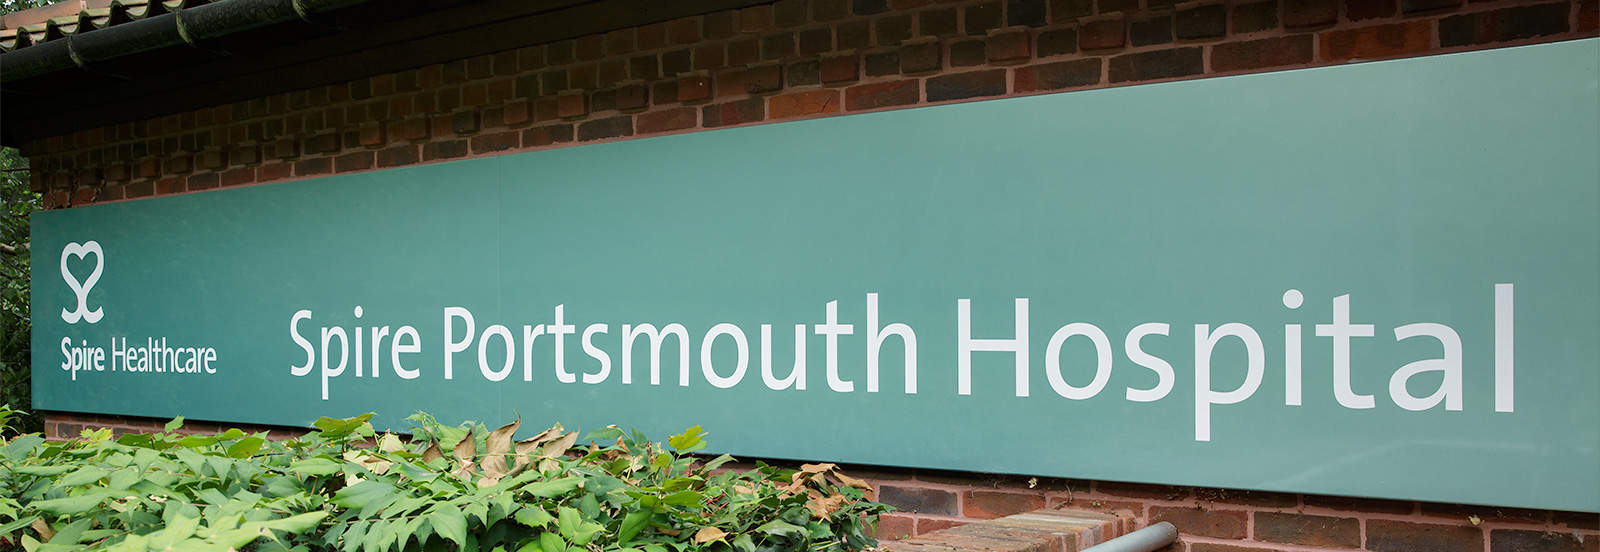 spire portsmouth hospital sign